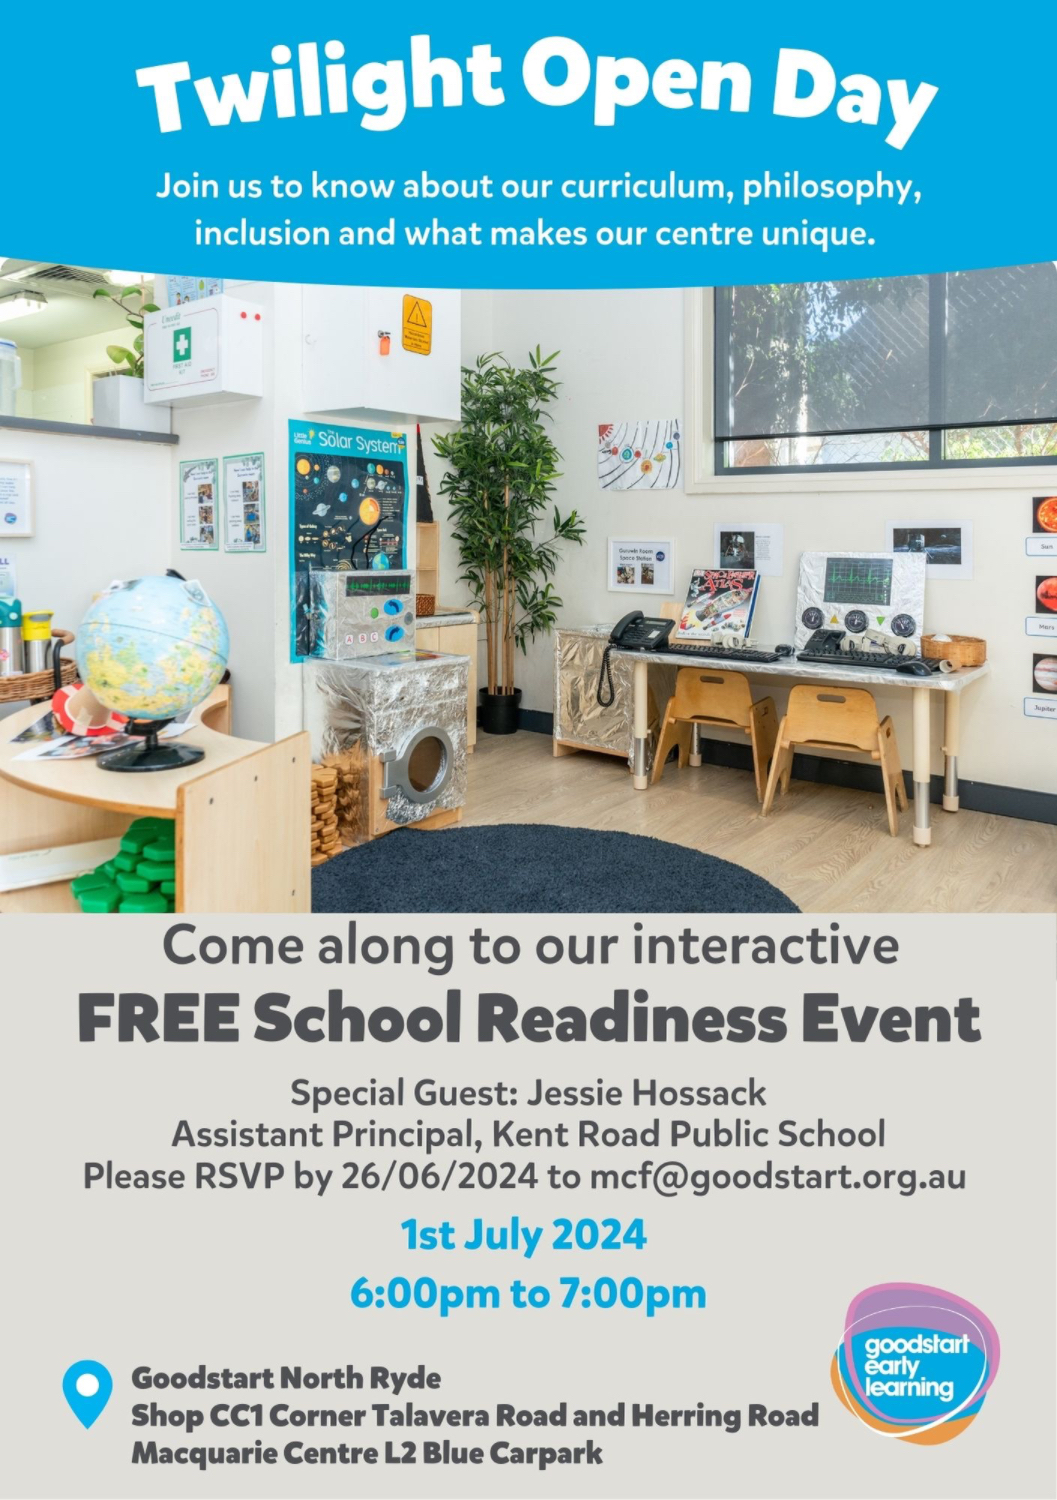 Free School Readiness Event - Twilight Open Day